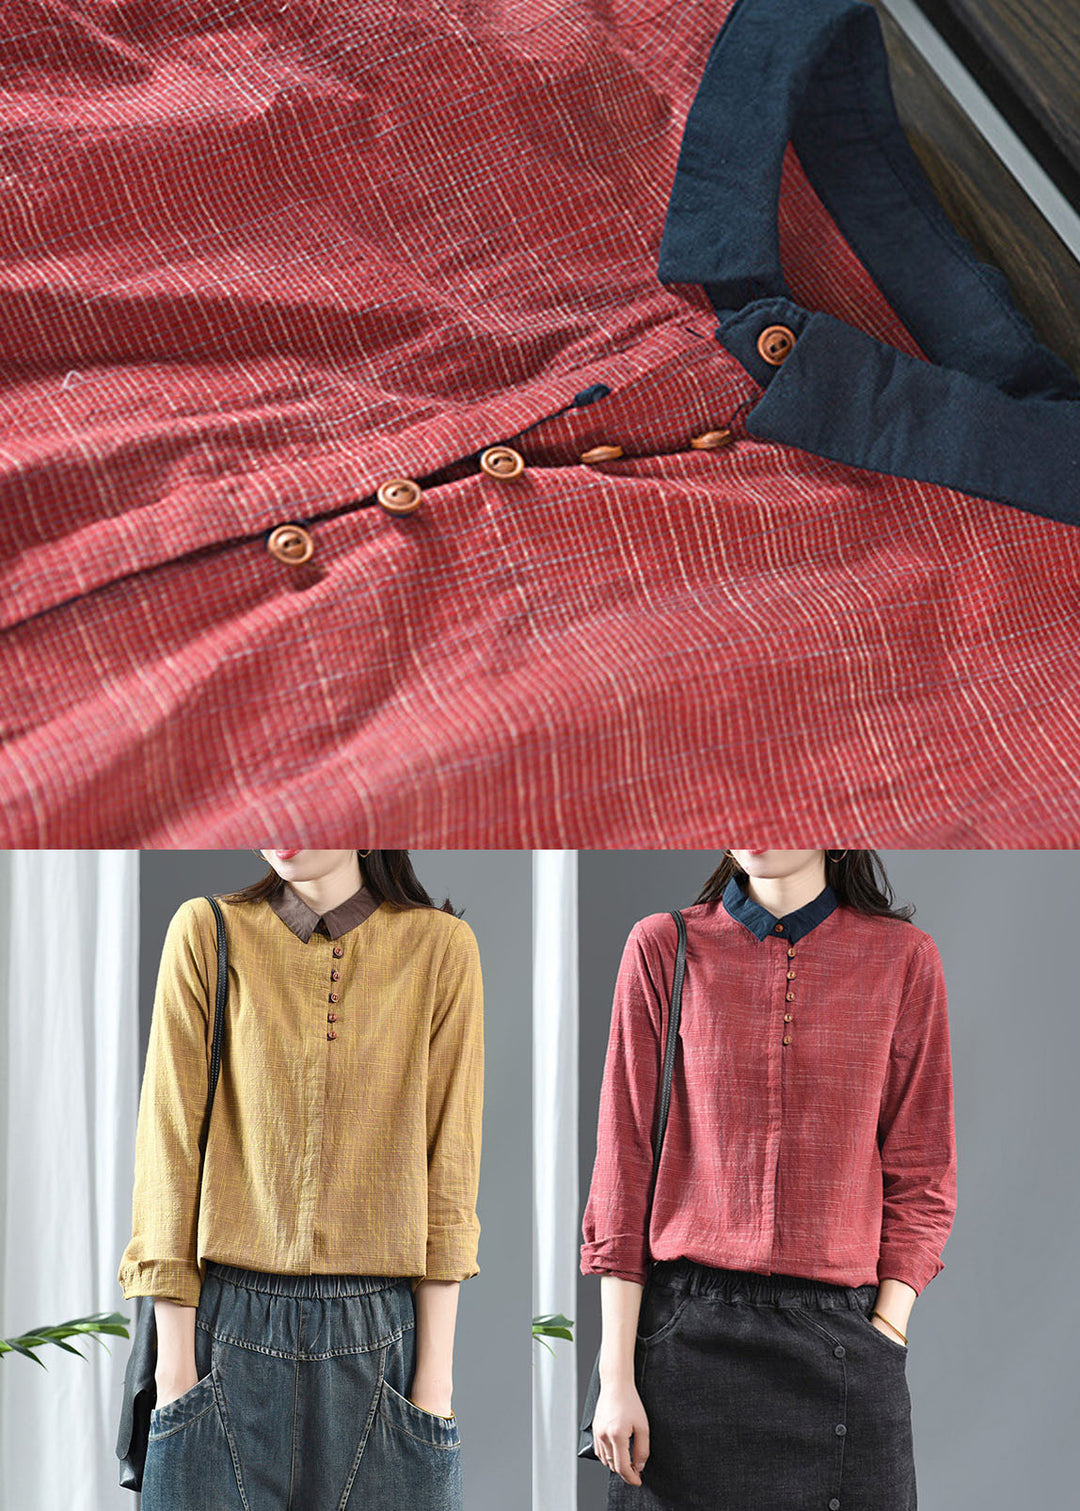 Vintage Red Peter Pan Collar Patchwork Cotton Shirt Long Sleeve